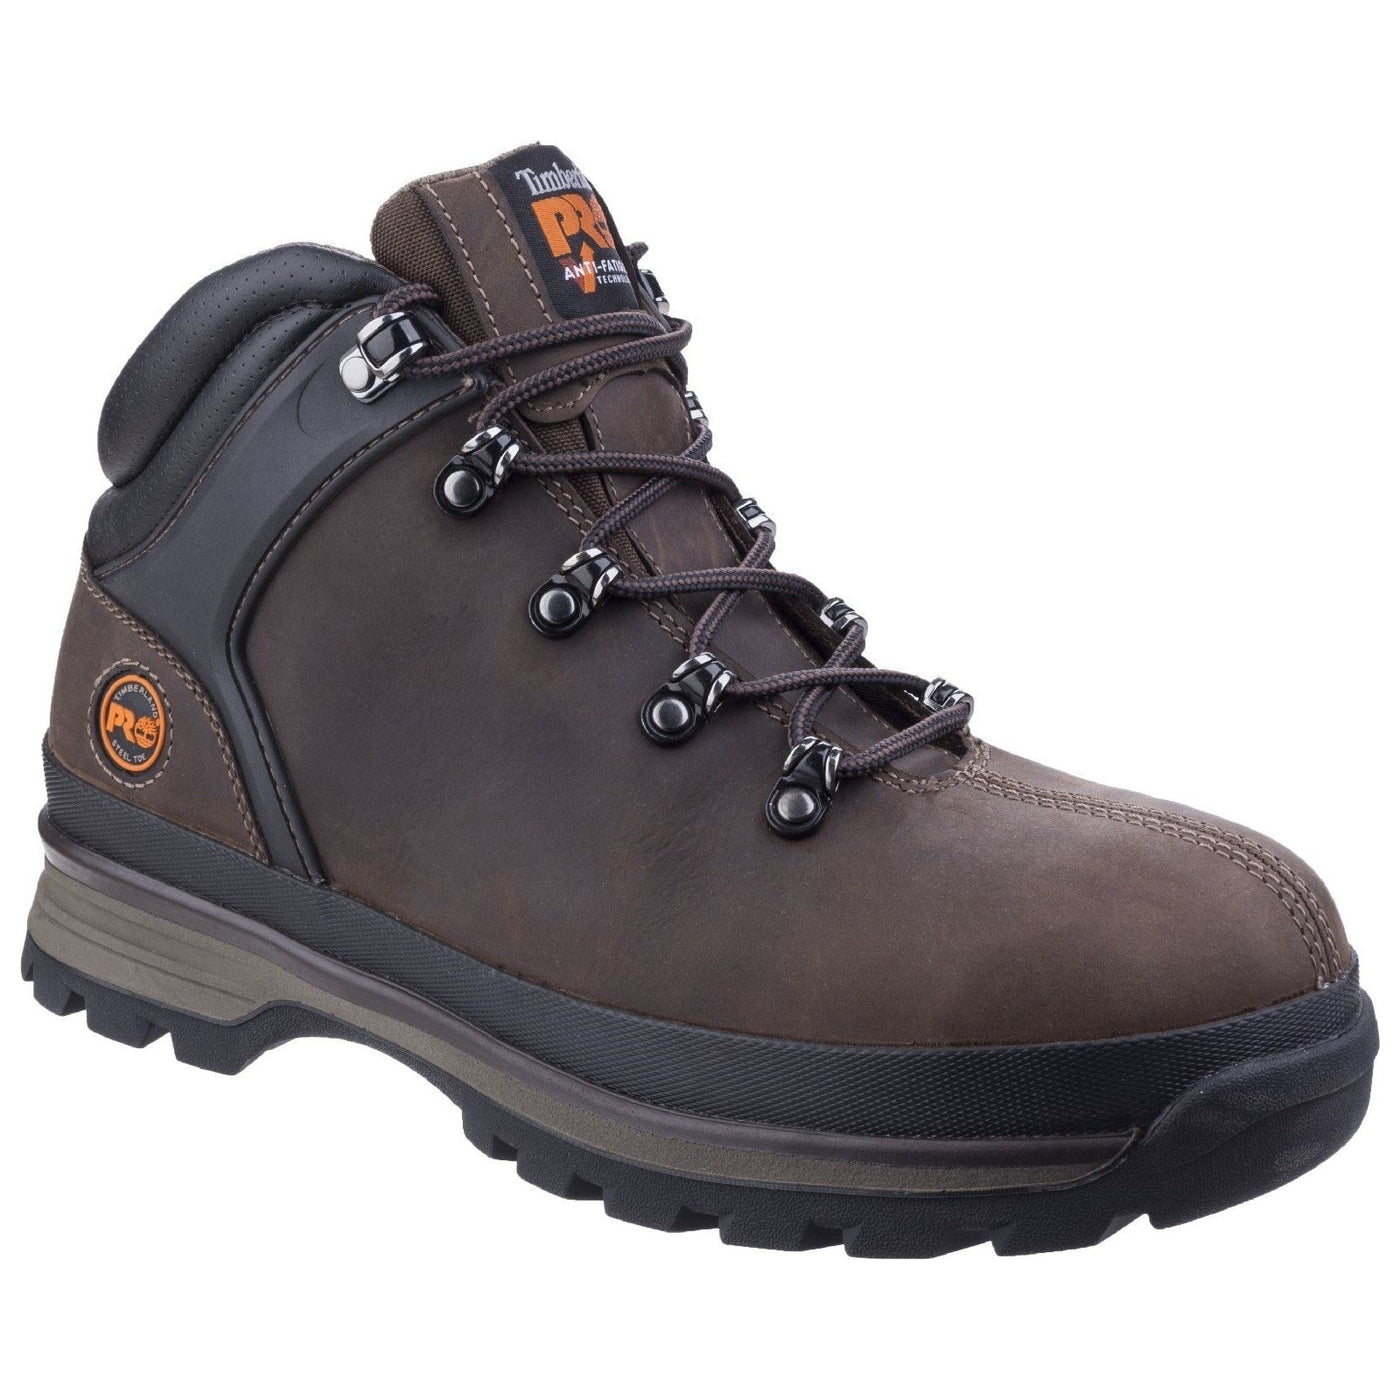 Timberland Splitrock Xt Safety Boots - Womens